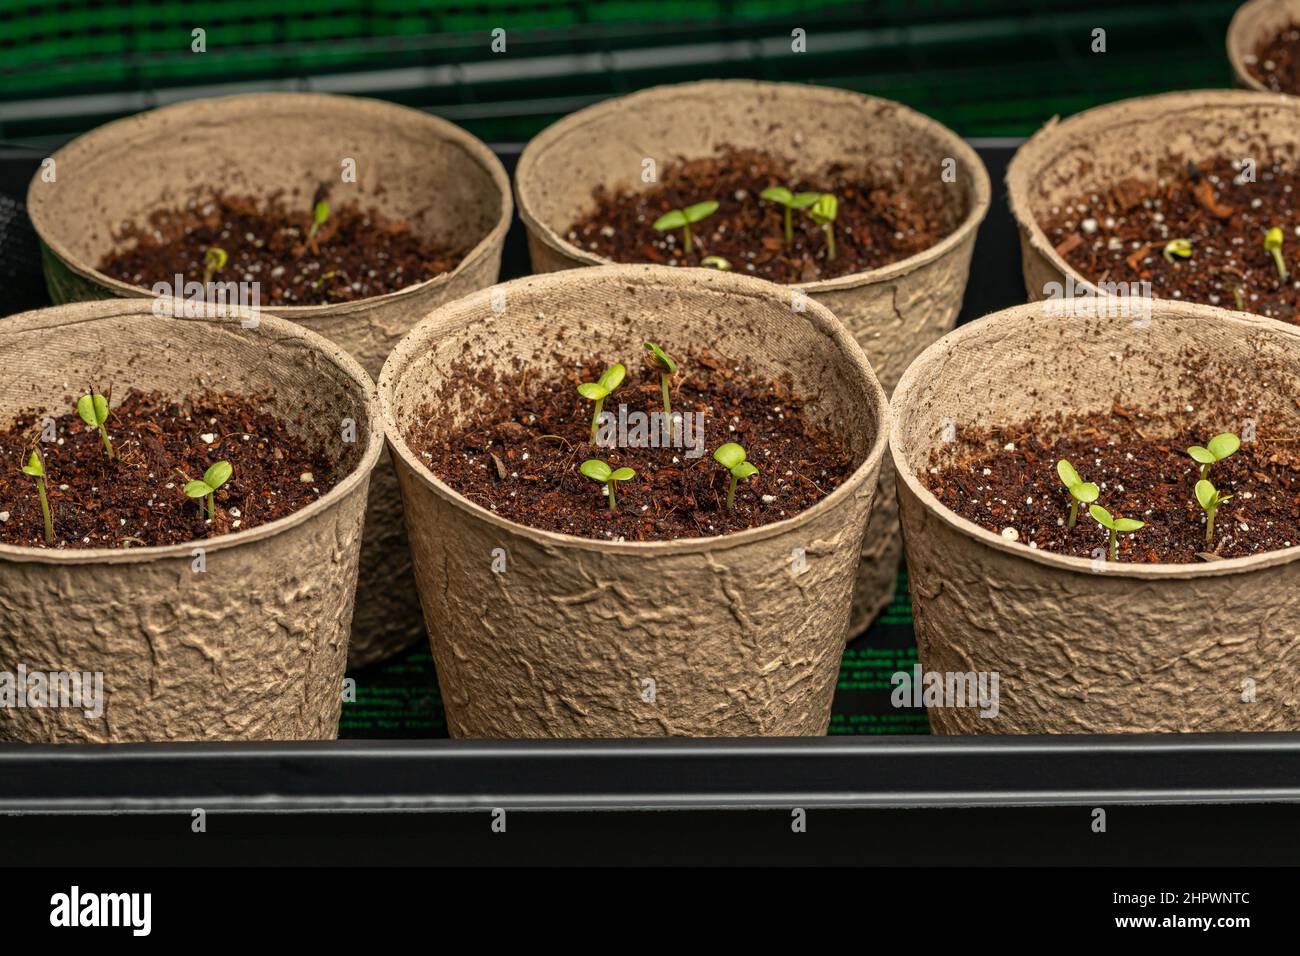 Zinnia flower seedling growing in indoor greenhouse. Gardening and horticulture concept. Stock Photo